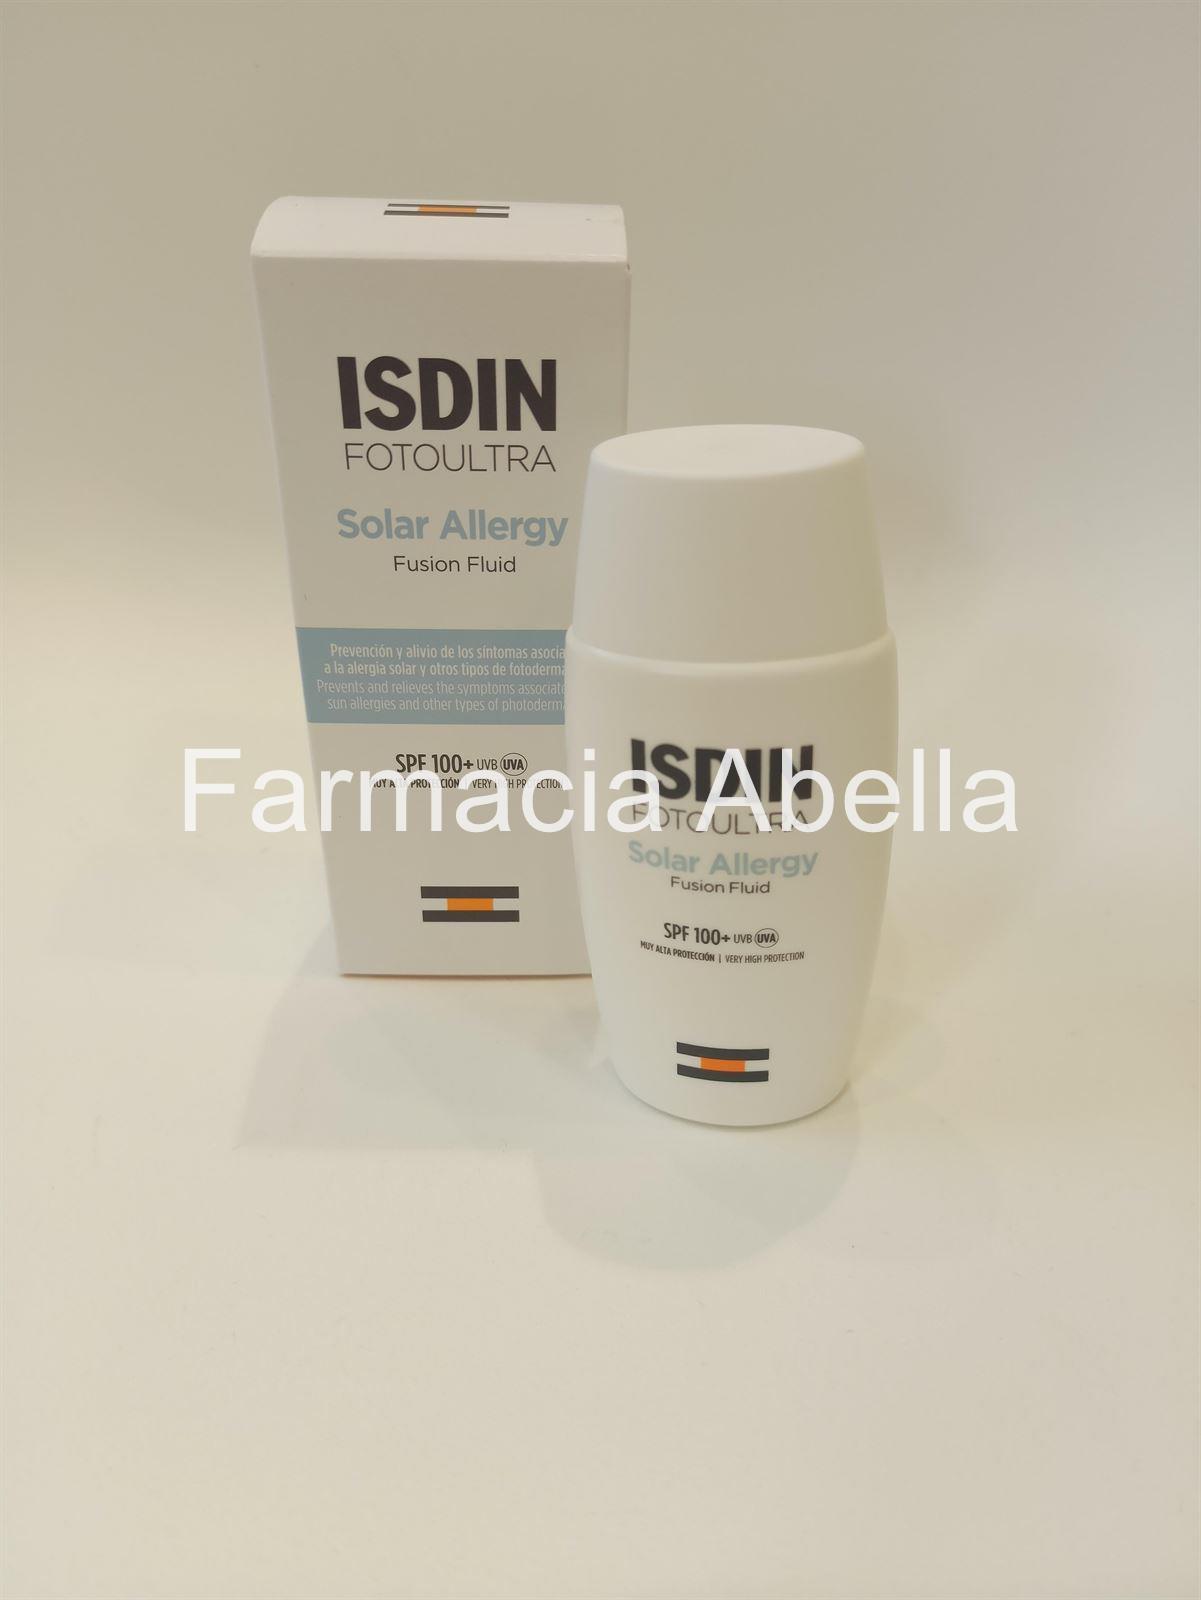 ISDIN fotoprotector fotoultra solar alergy fusion fluid spf100+ 50 ml - Imagen 1